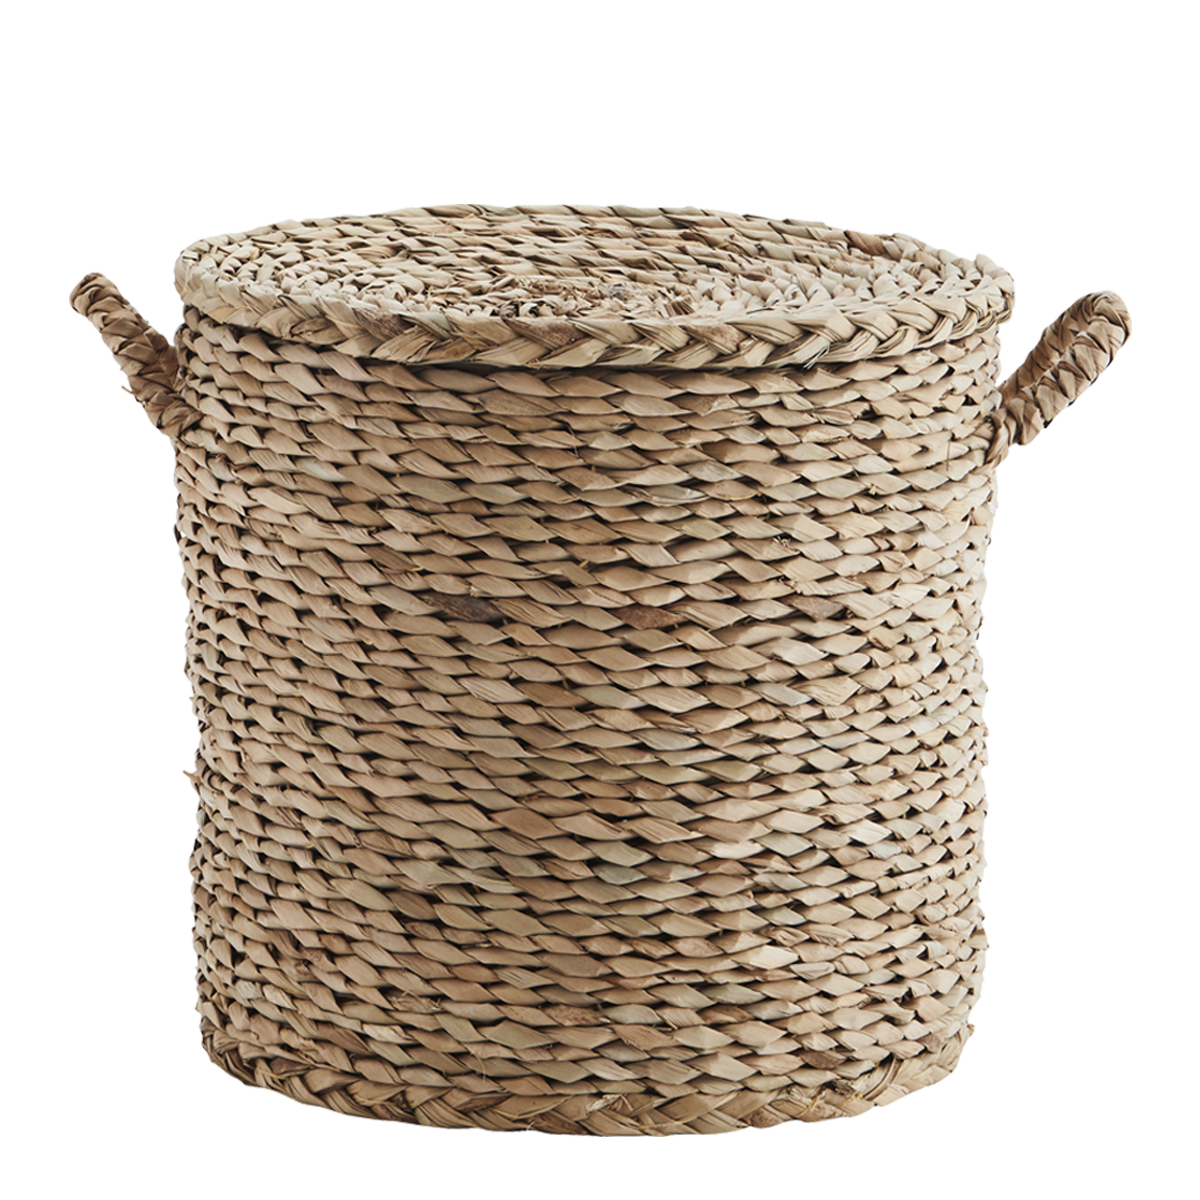 Seagrass basket w/ lid